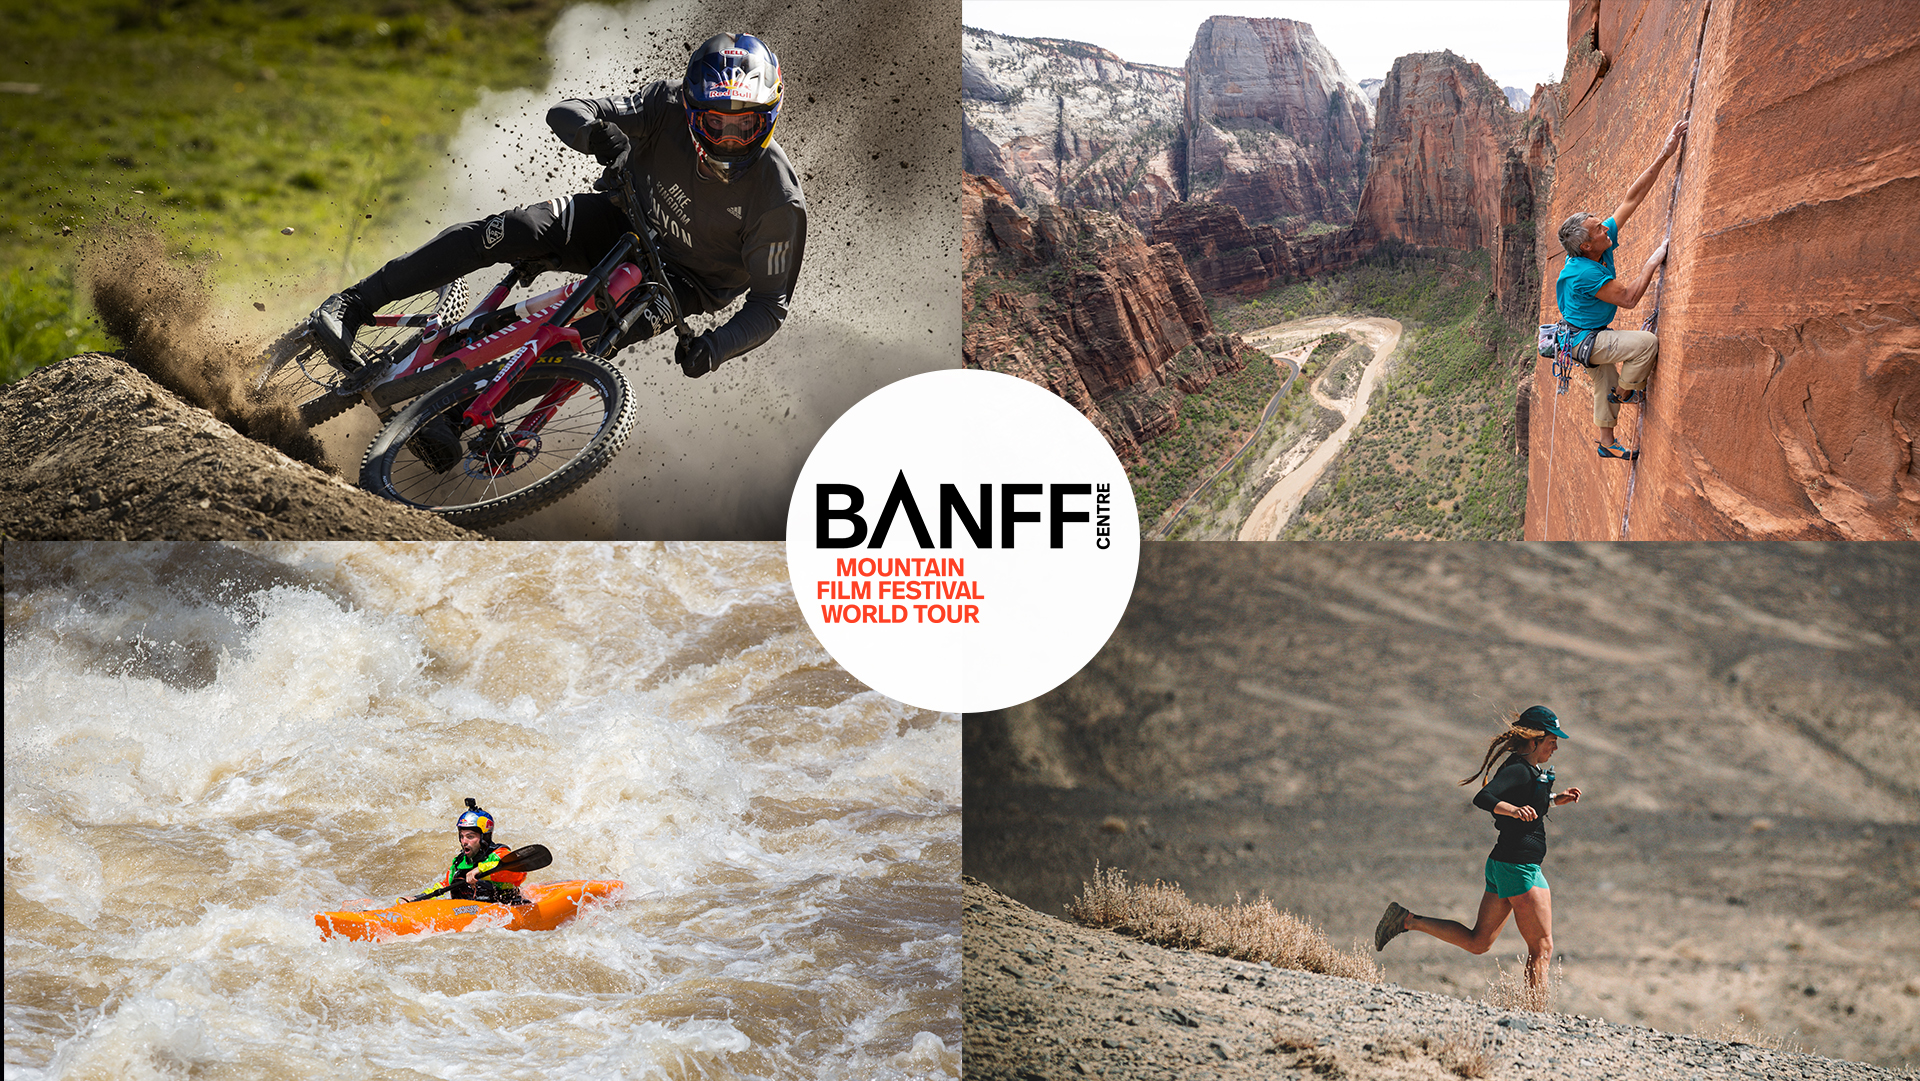 Banff 4 programmes